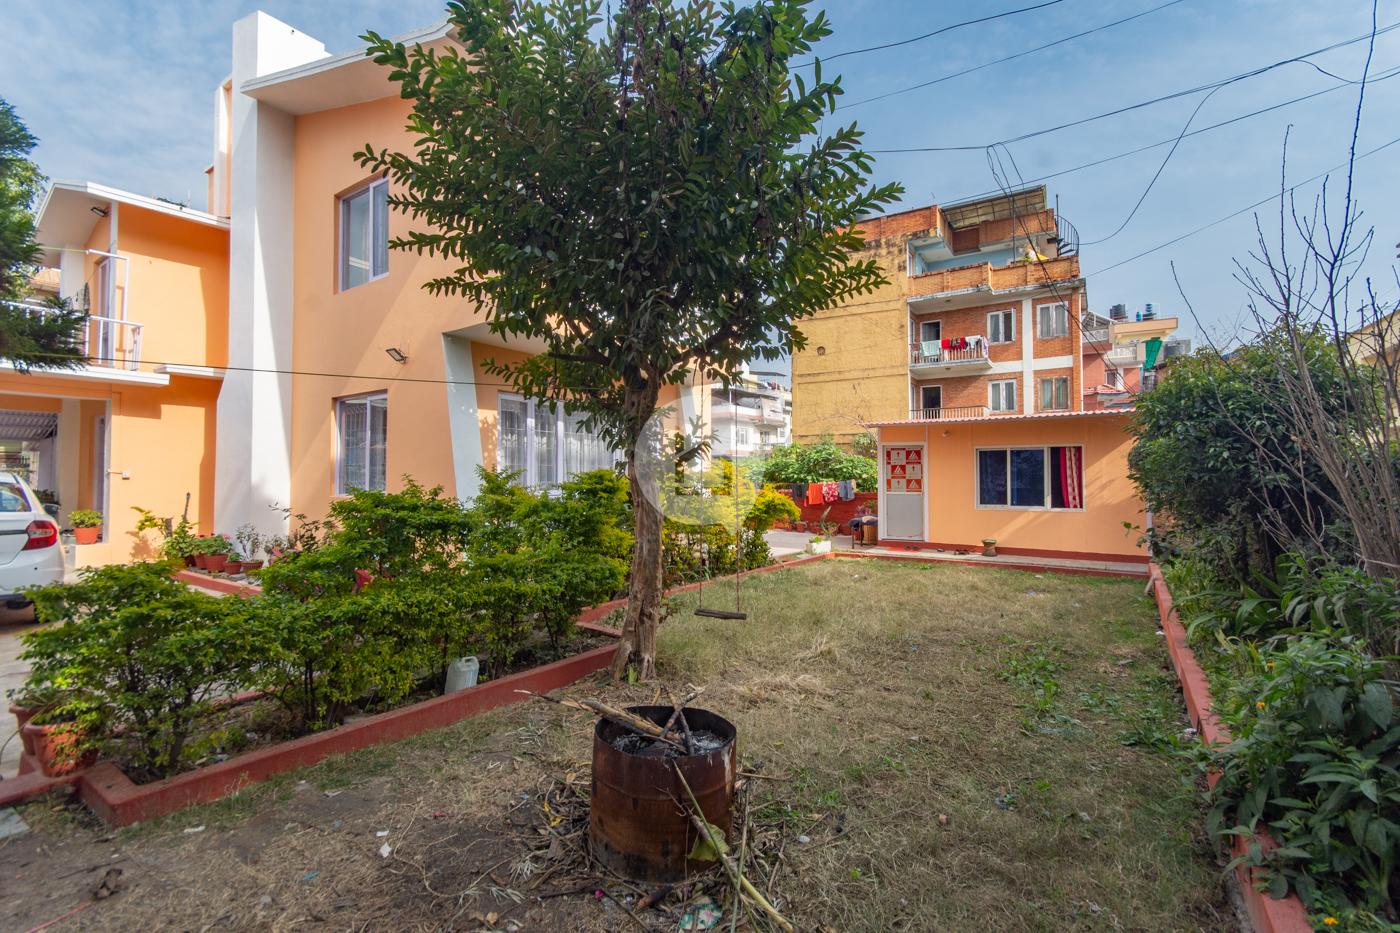 Residential or Commercial Land : Land for Sale in Mid Baneshwor, Kathmandu Image 4